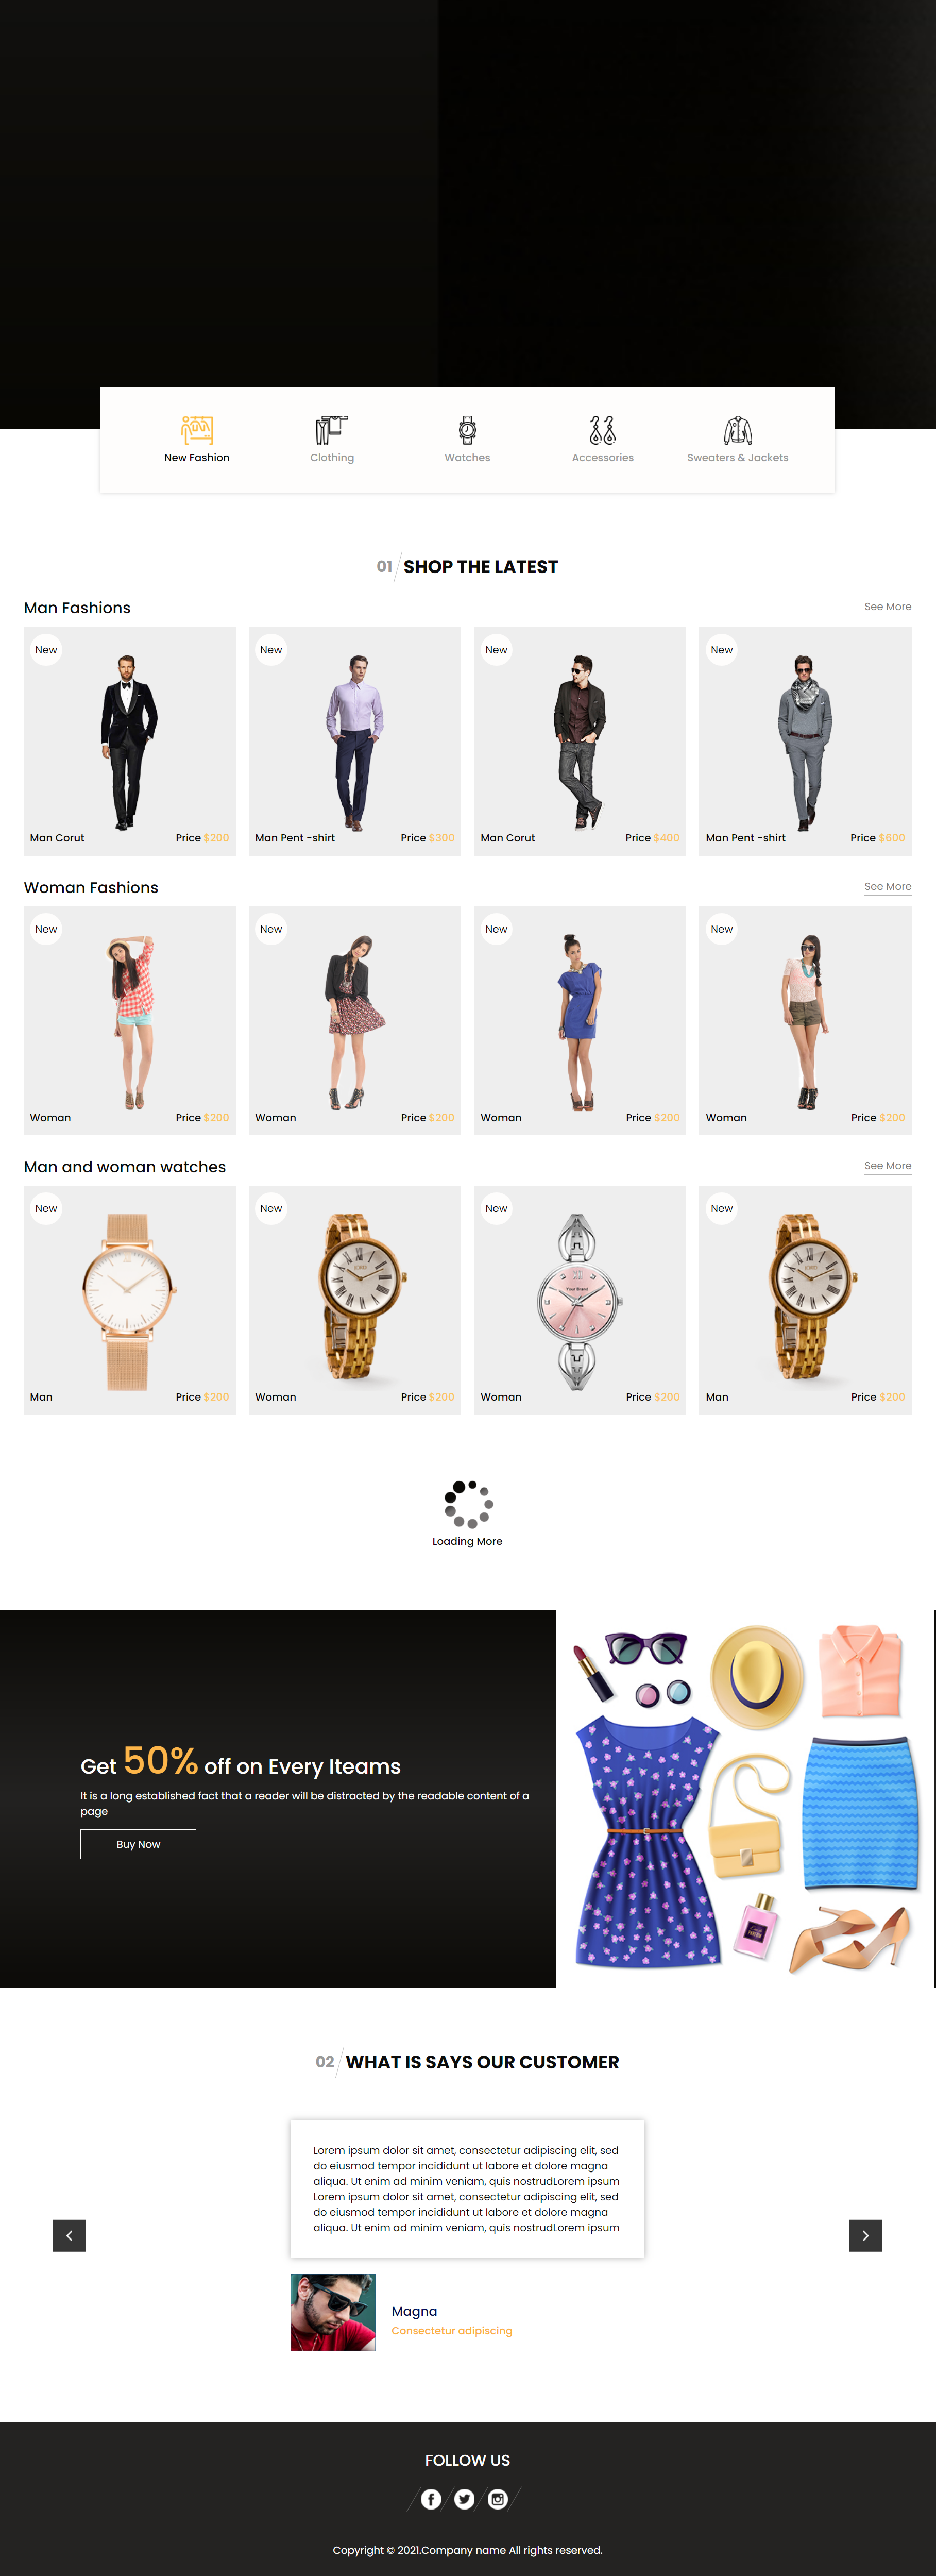 bootstrap黄色欧美样式时尚服装商城整站网页模板代码下载